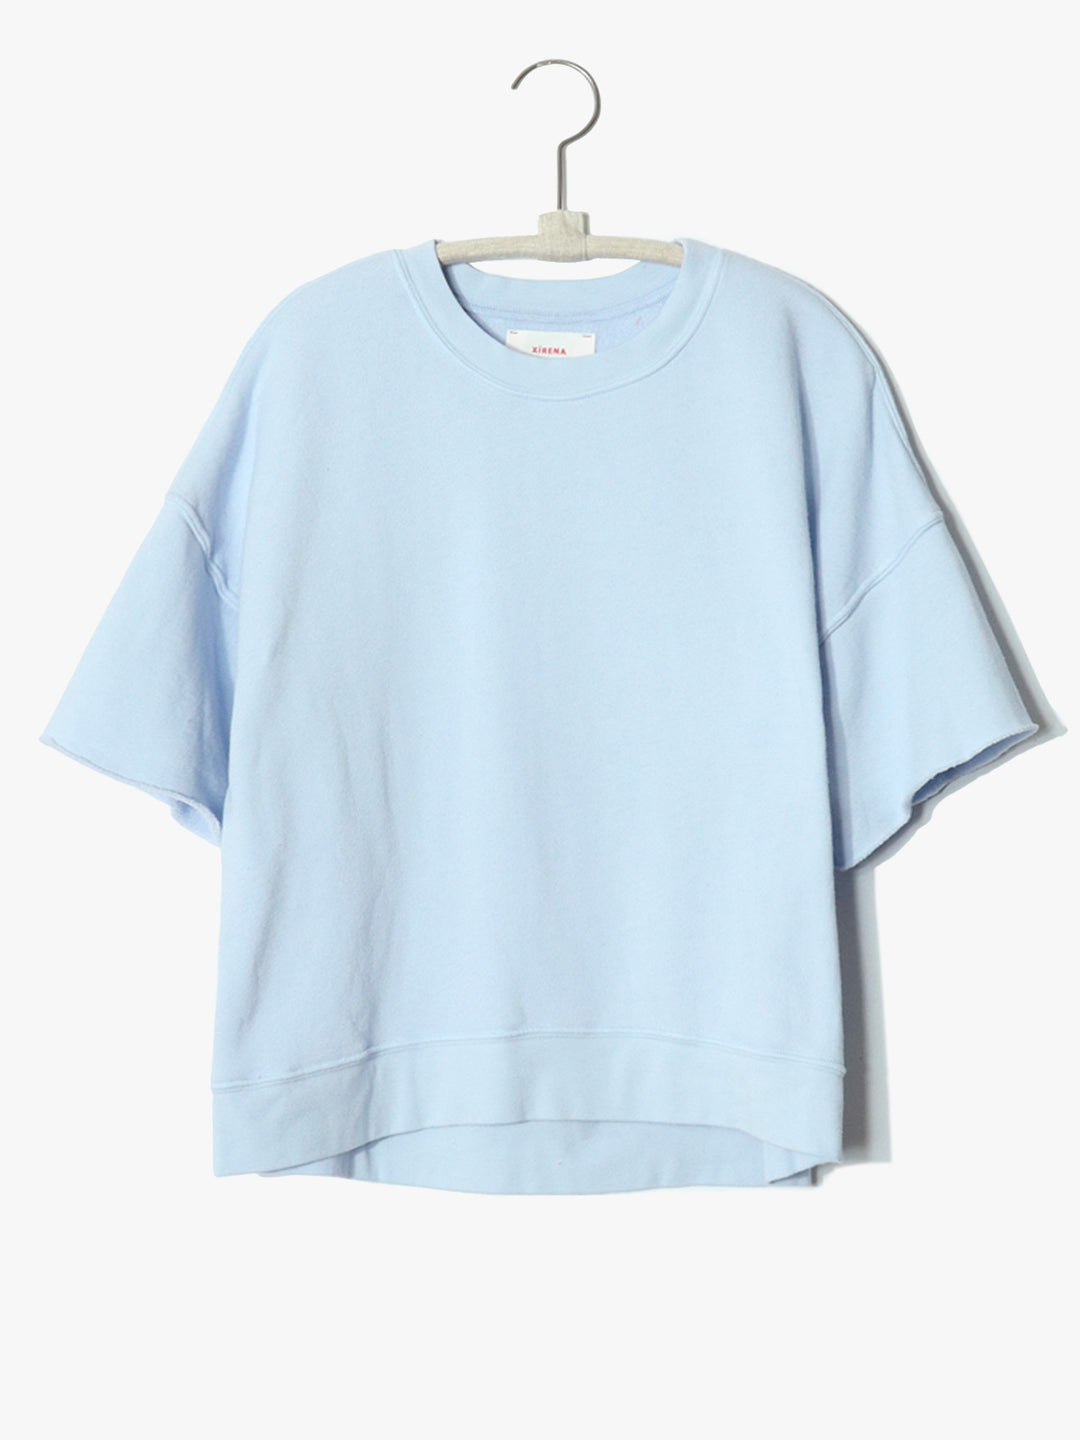 Xirena - O.G. Sweatshirt in Powder Blu